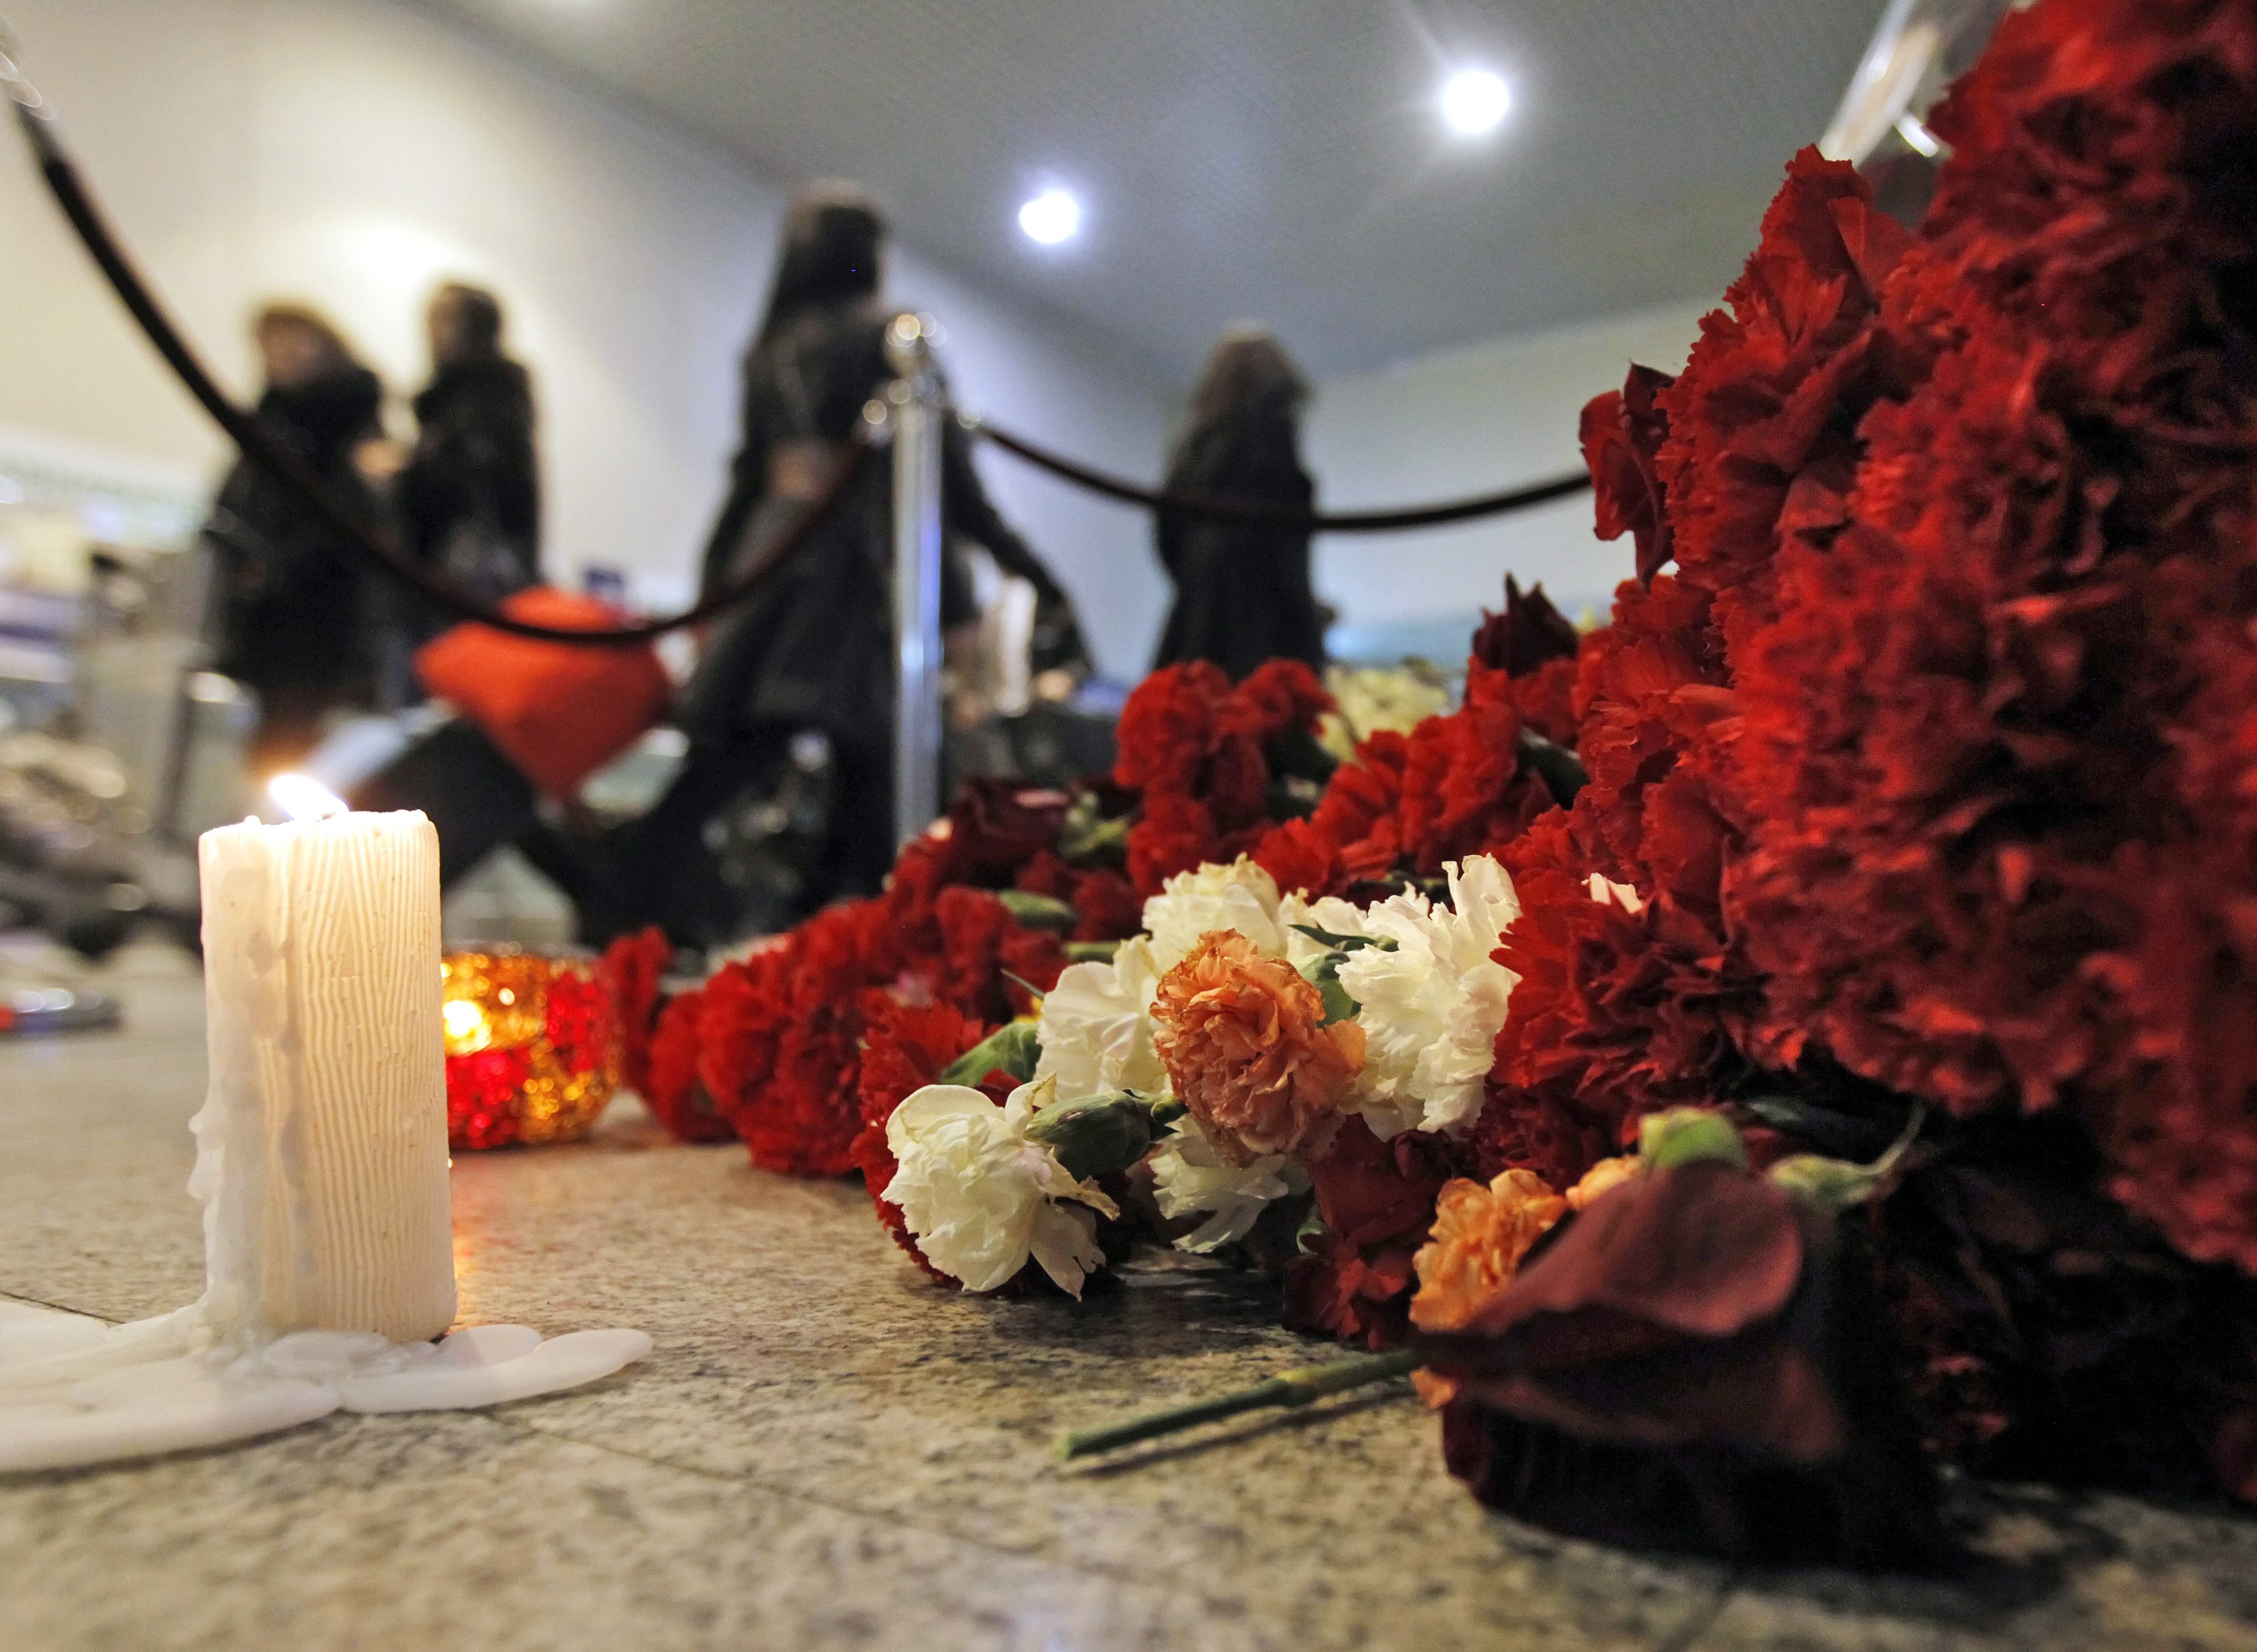 Астрахань у вас траур у нас праздник. Террористический акт в Домодедово. День памяти жертв терроризма.